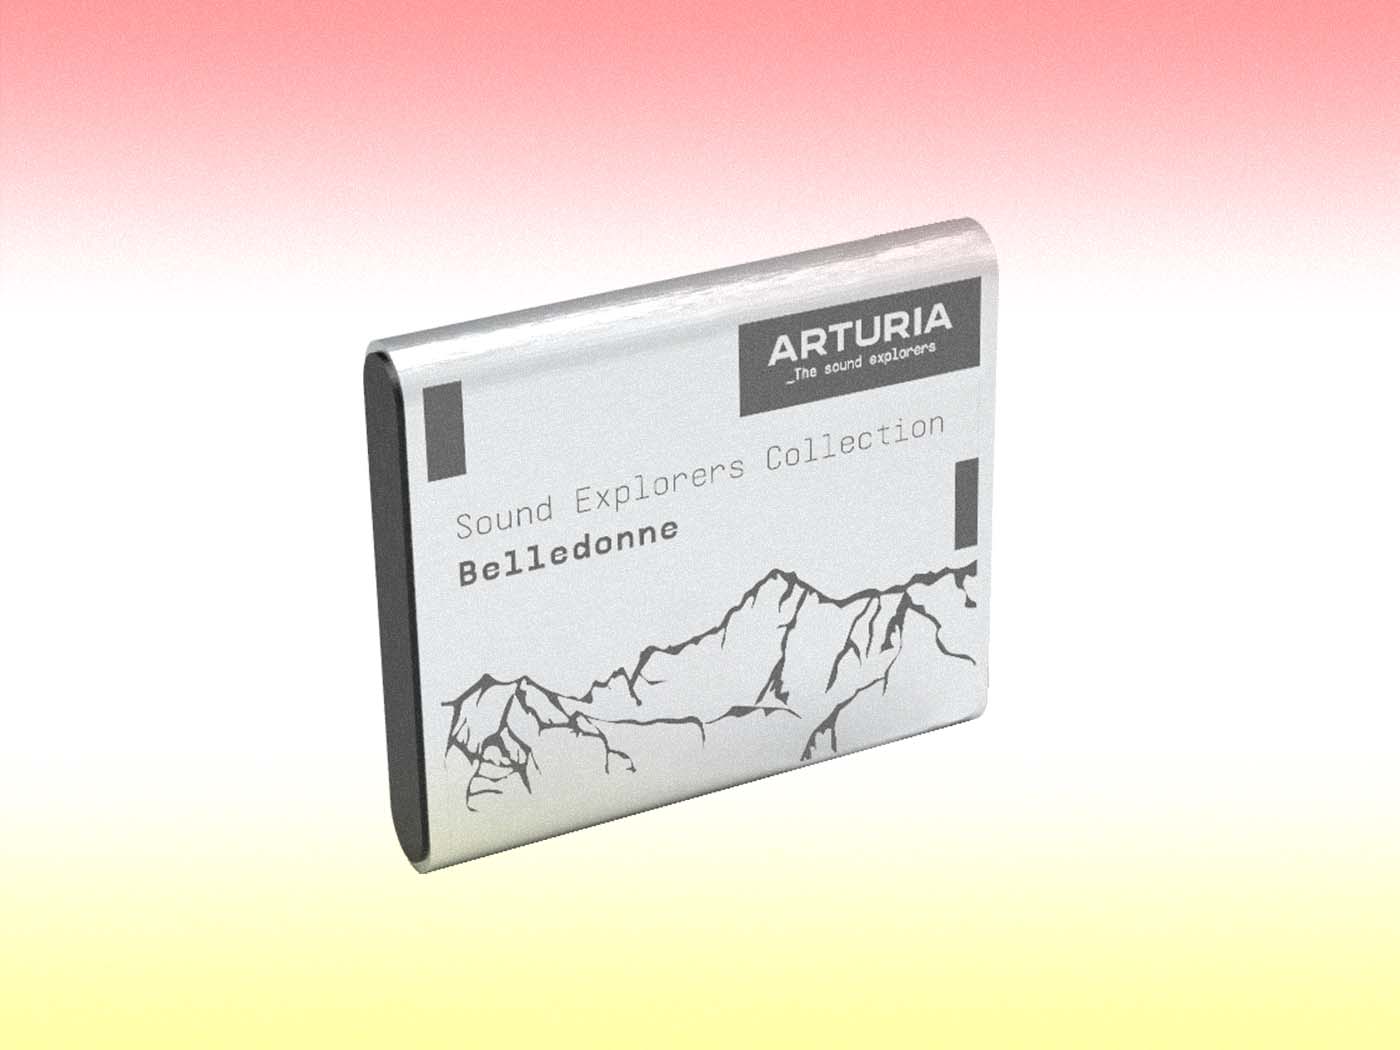 arturia-sound-explorers-collection-belledonne@2000x1500